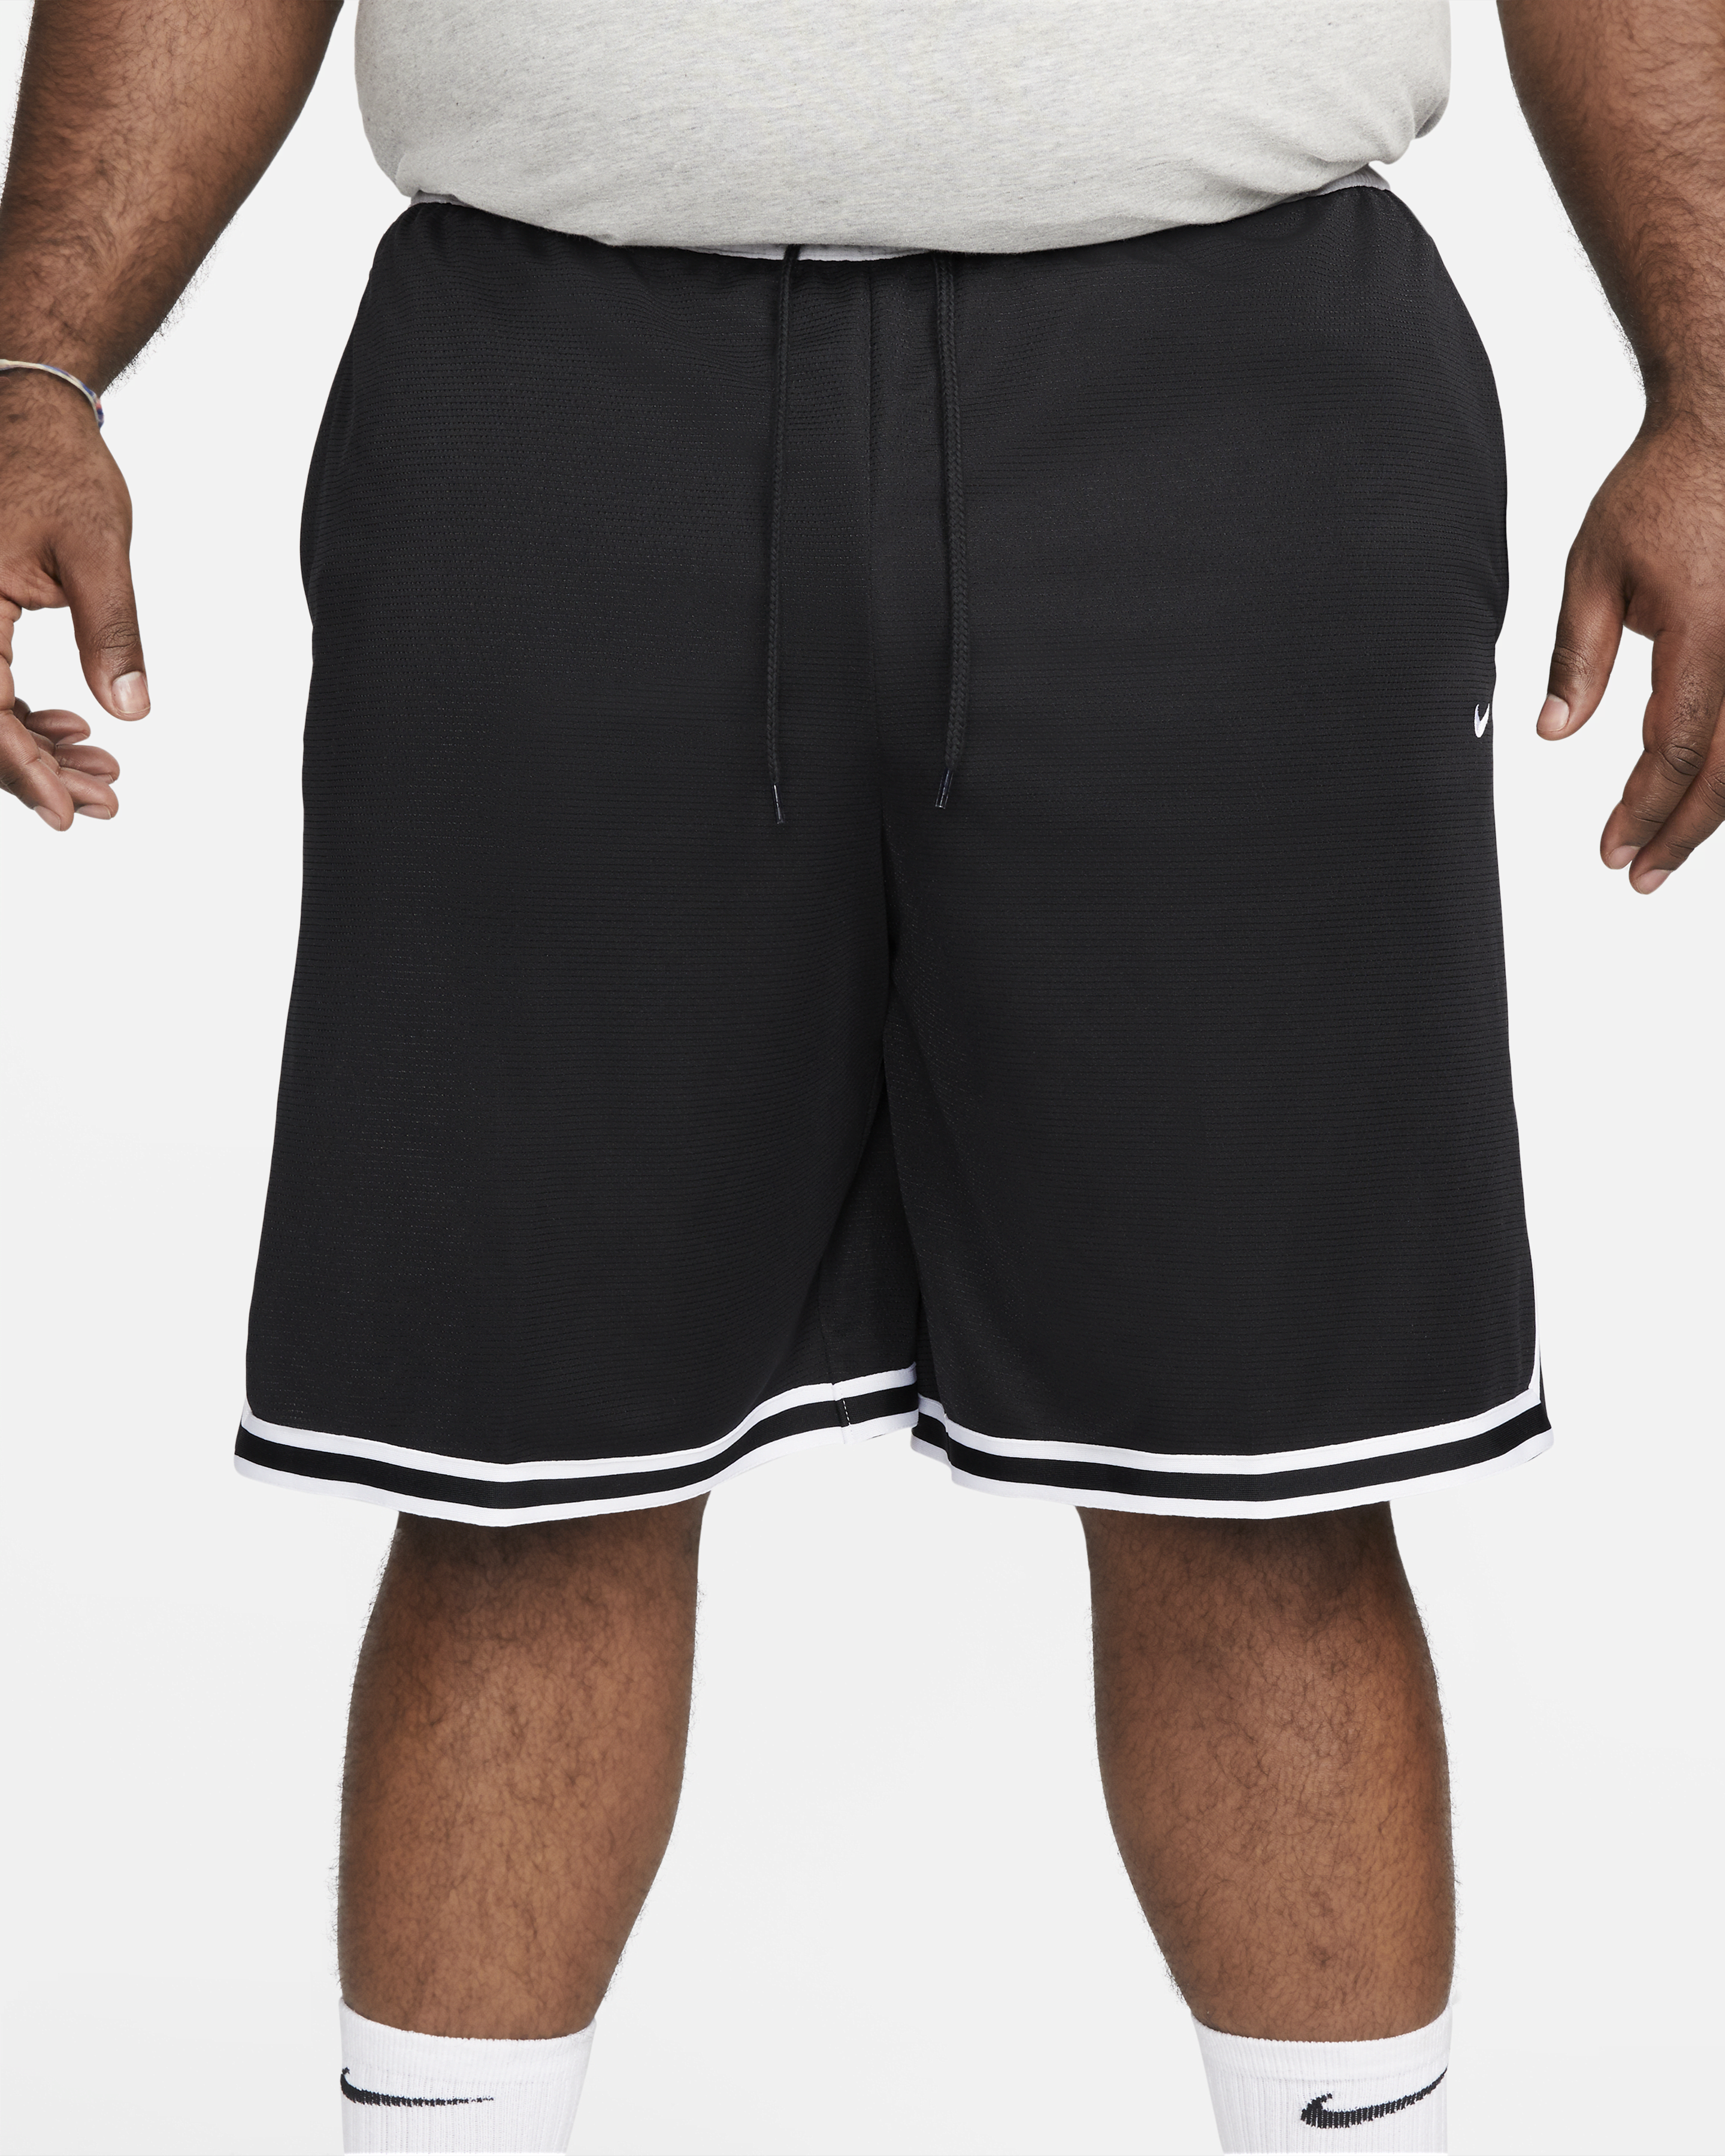 American Basketball Shorts Men's ins Fashion Loose Versatile